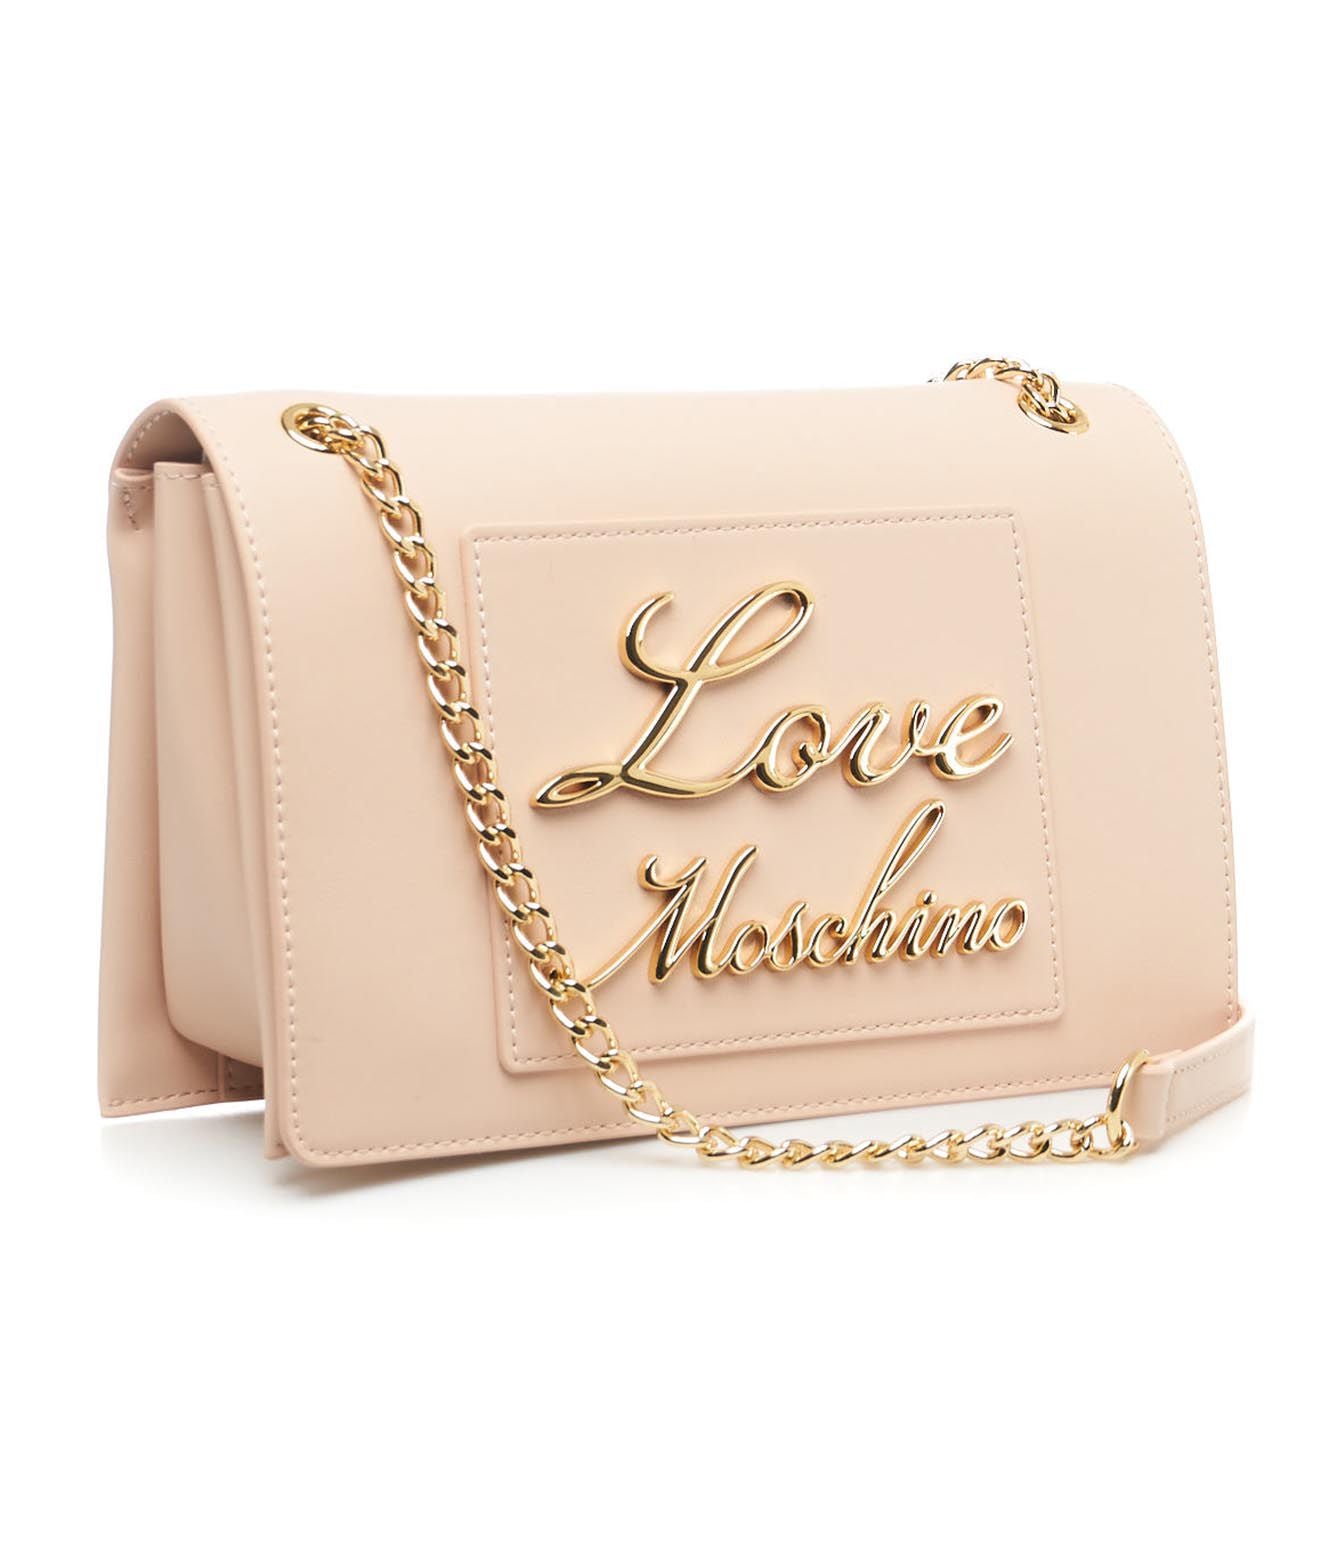 LOVE Moschino Quilted Wallet NEW $141 NWT AUTH ivory handbag DESIGNER purse  SALE | eBay